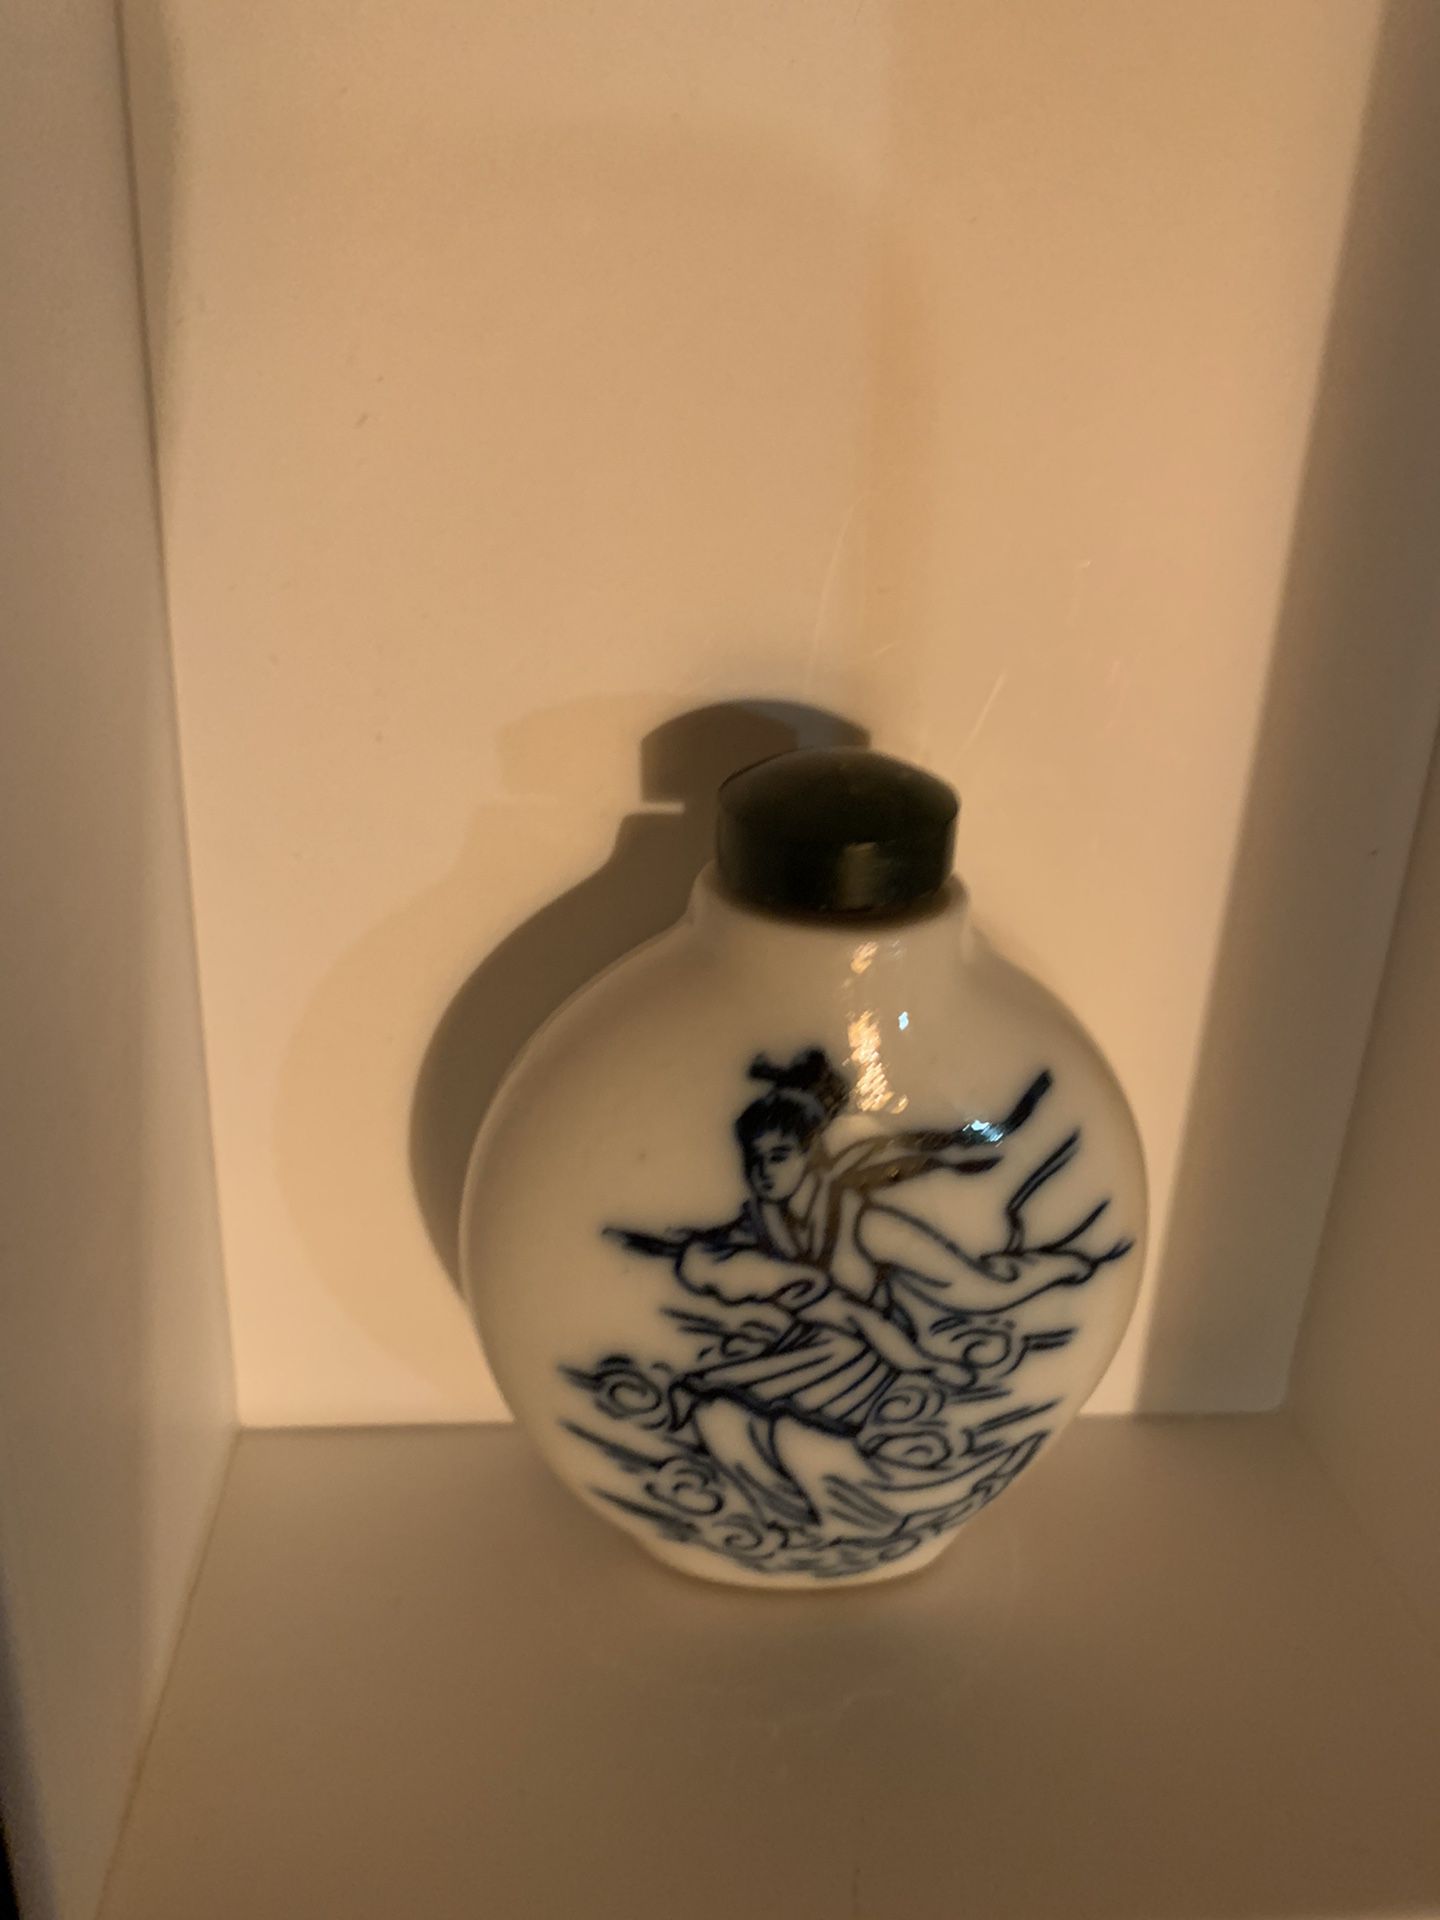 Vintage Ceramic Japanese Snuf Bottle